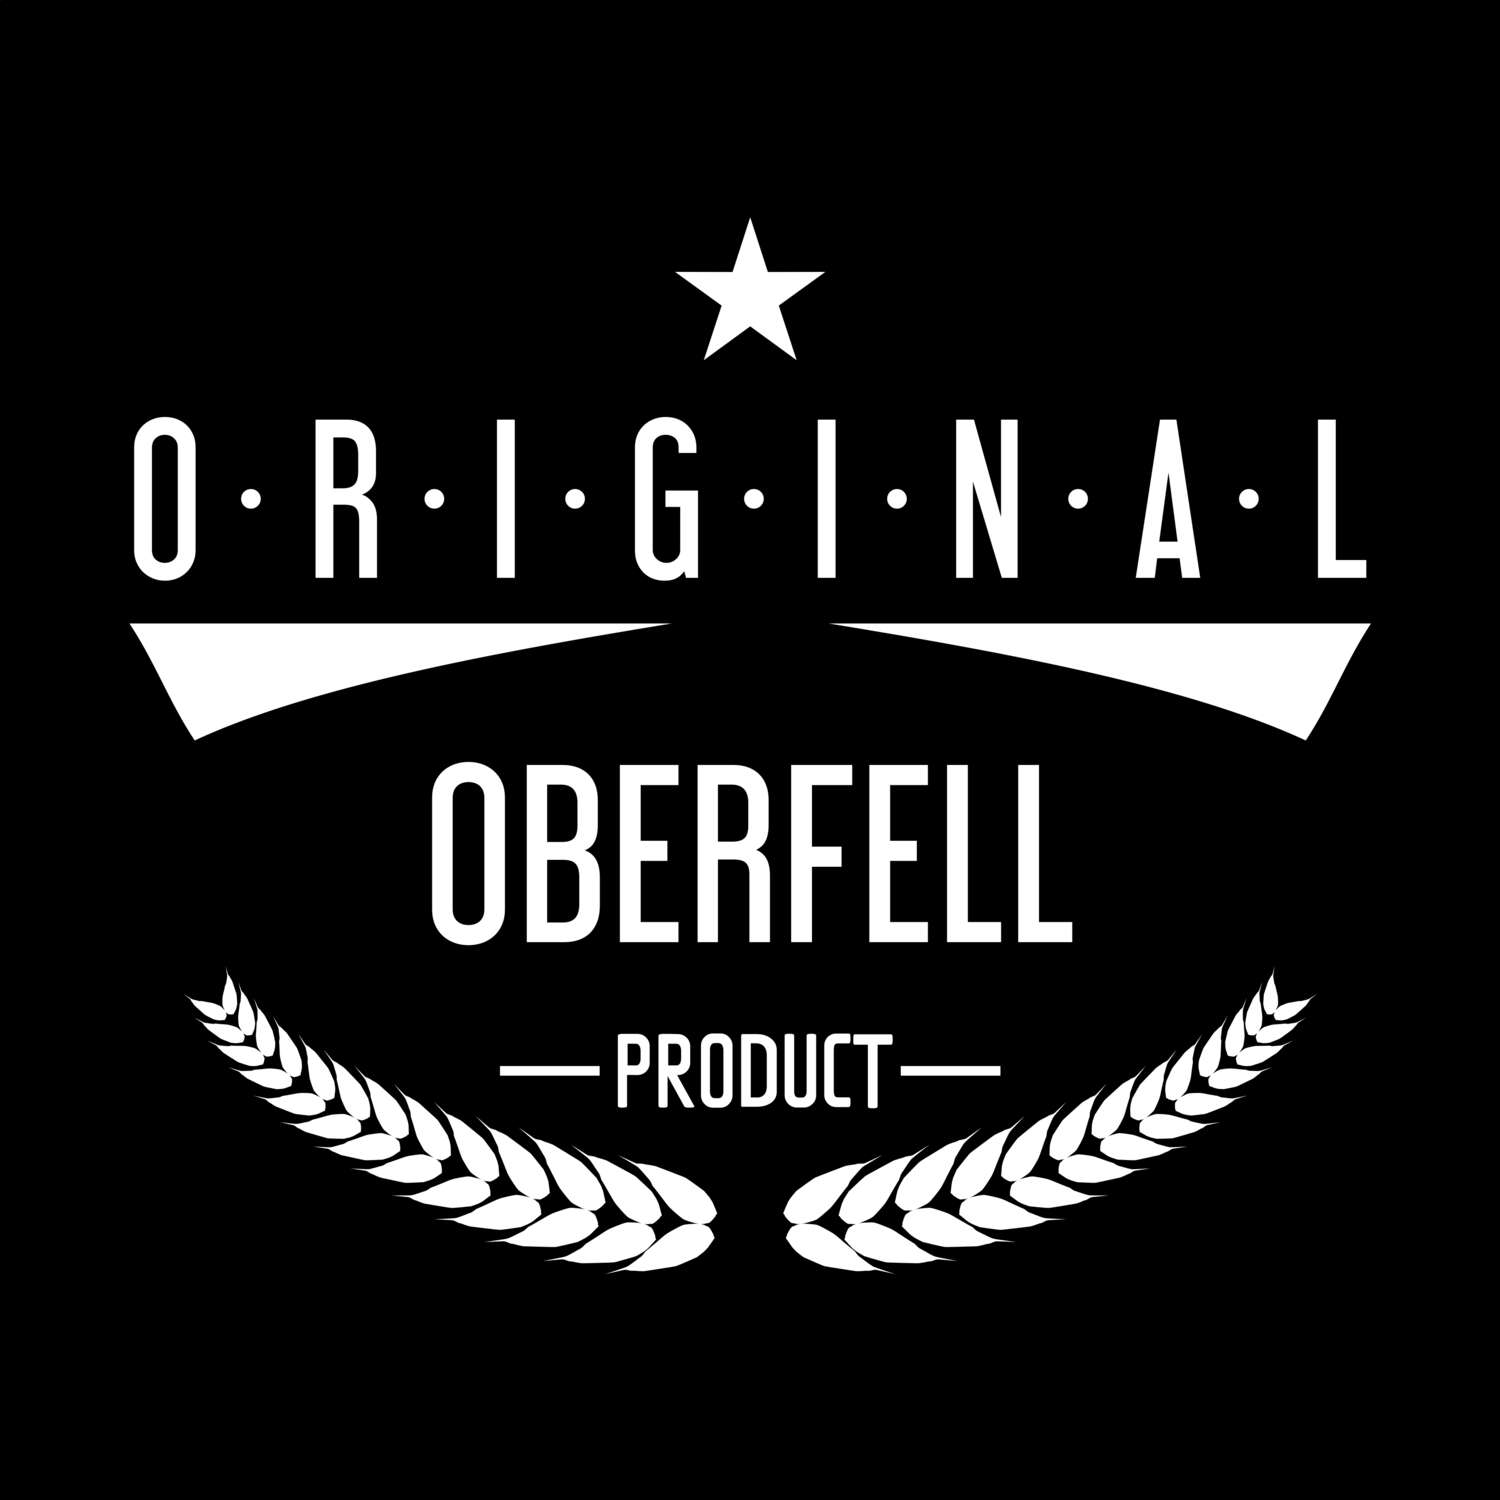 Oberfell T-Shirt »Original Product«